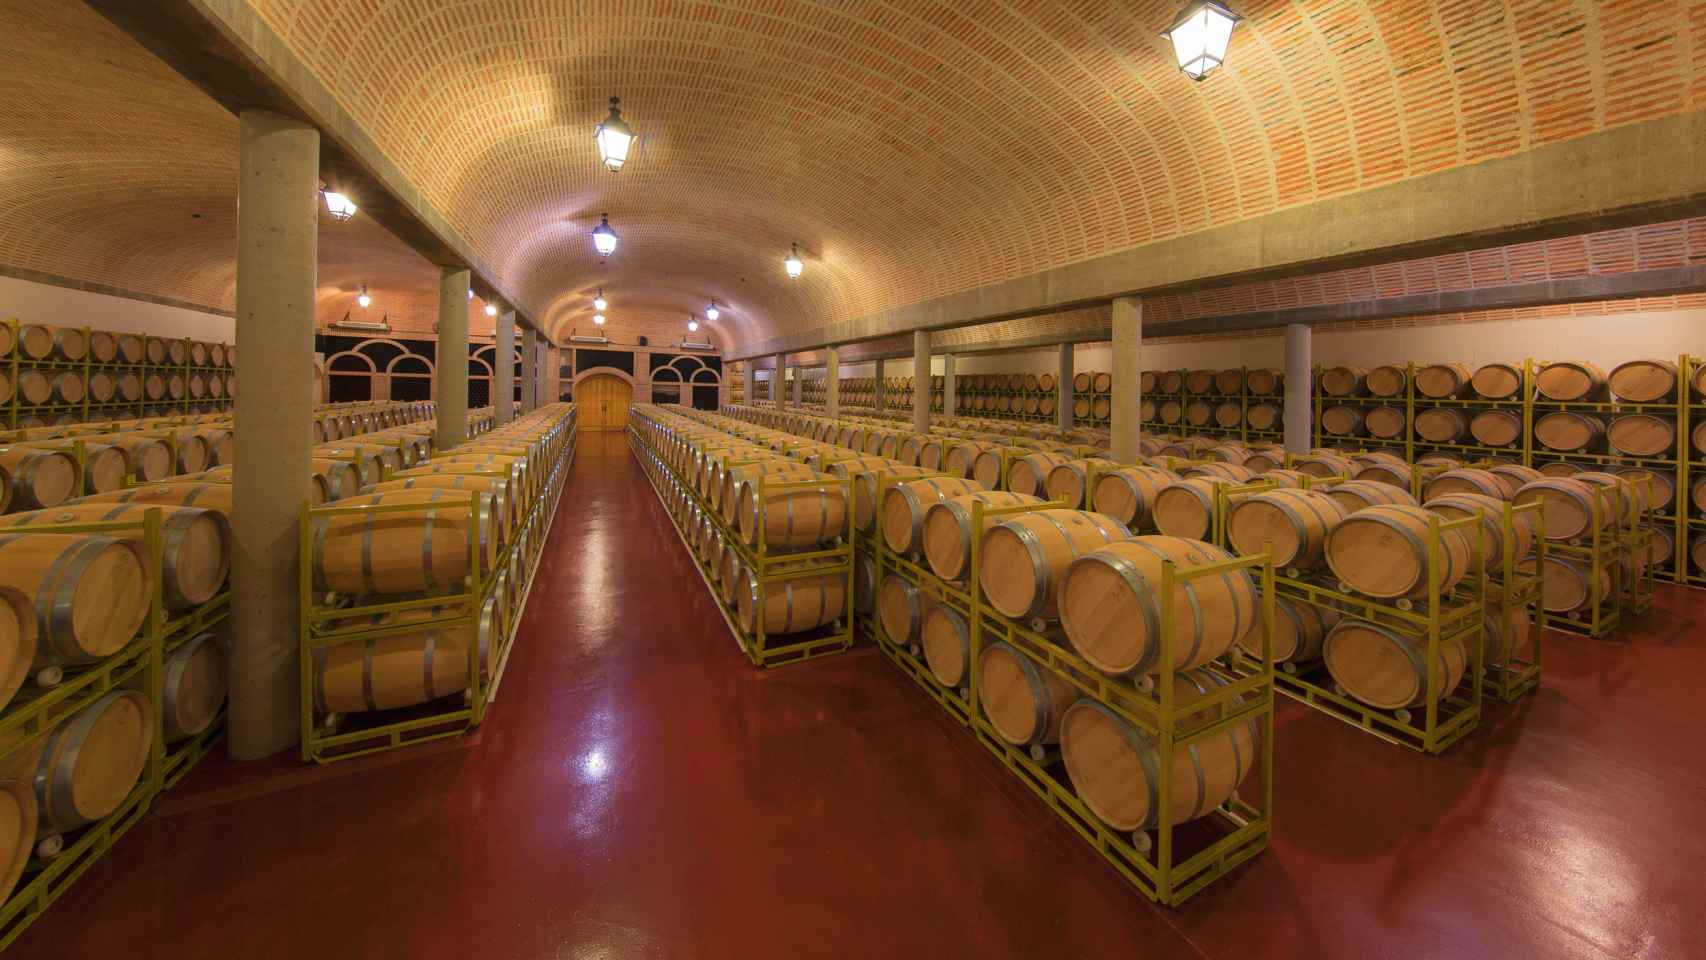 La sala de barricas de las Bodegas Pérez Pascuas, donde el vino tinto Viña Pedrosa fermenta durante 18 meses.